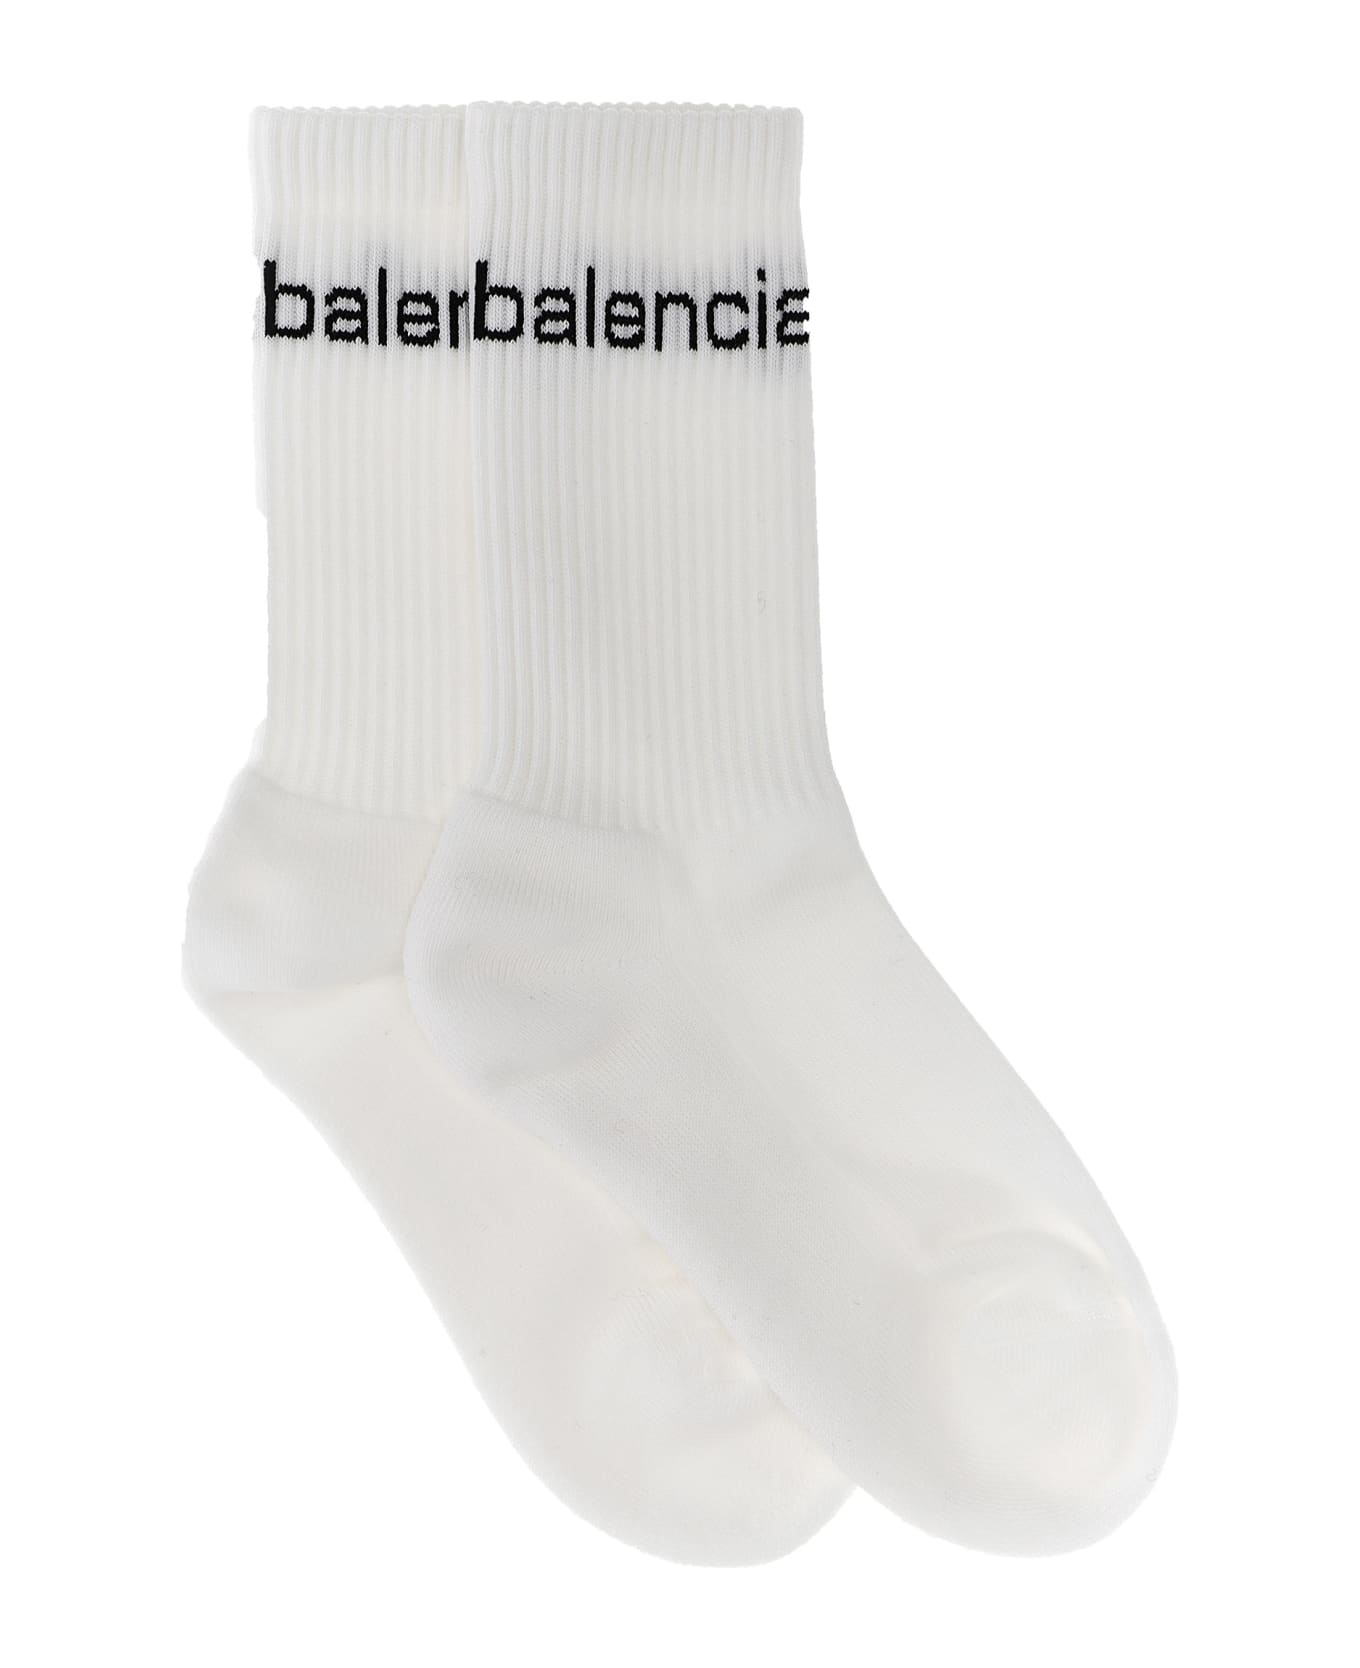 Balenciaga Socks - white